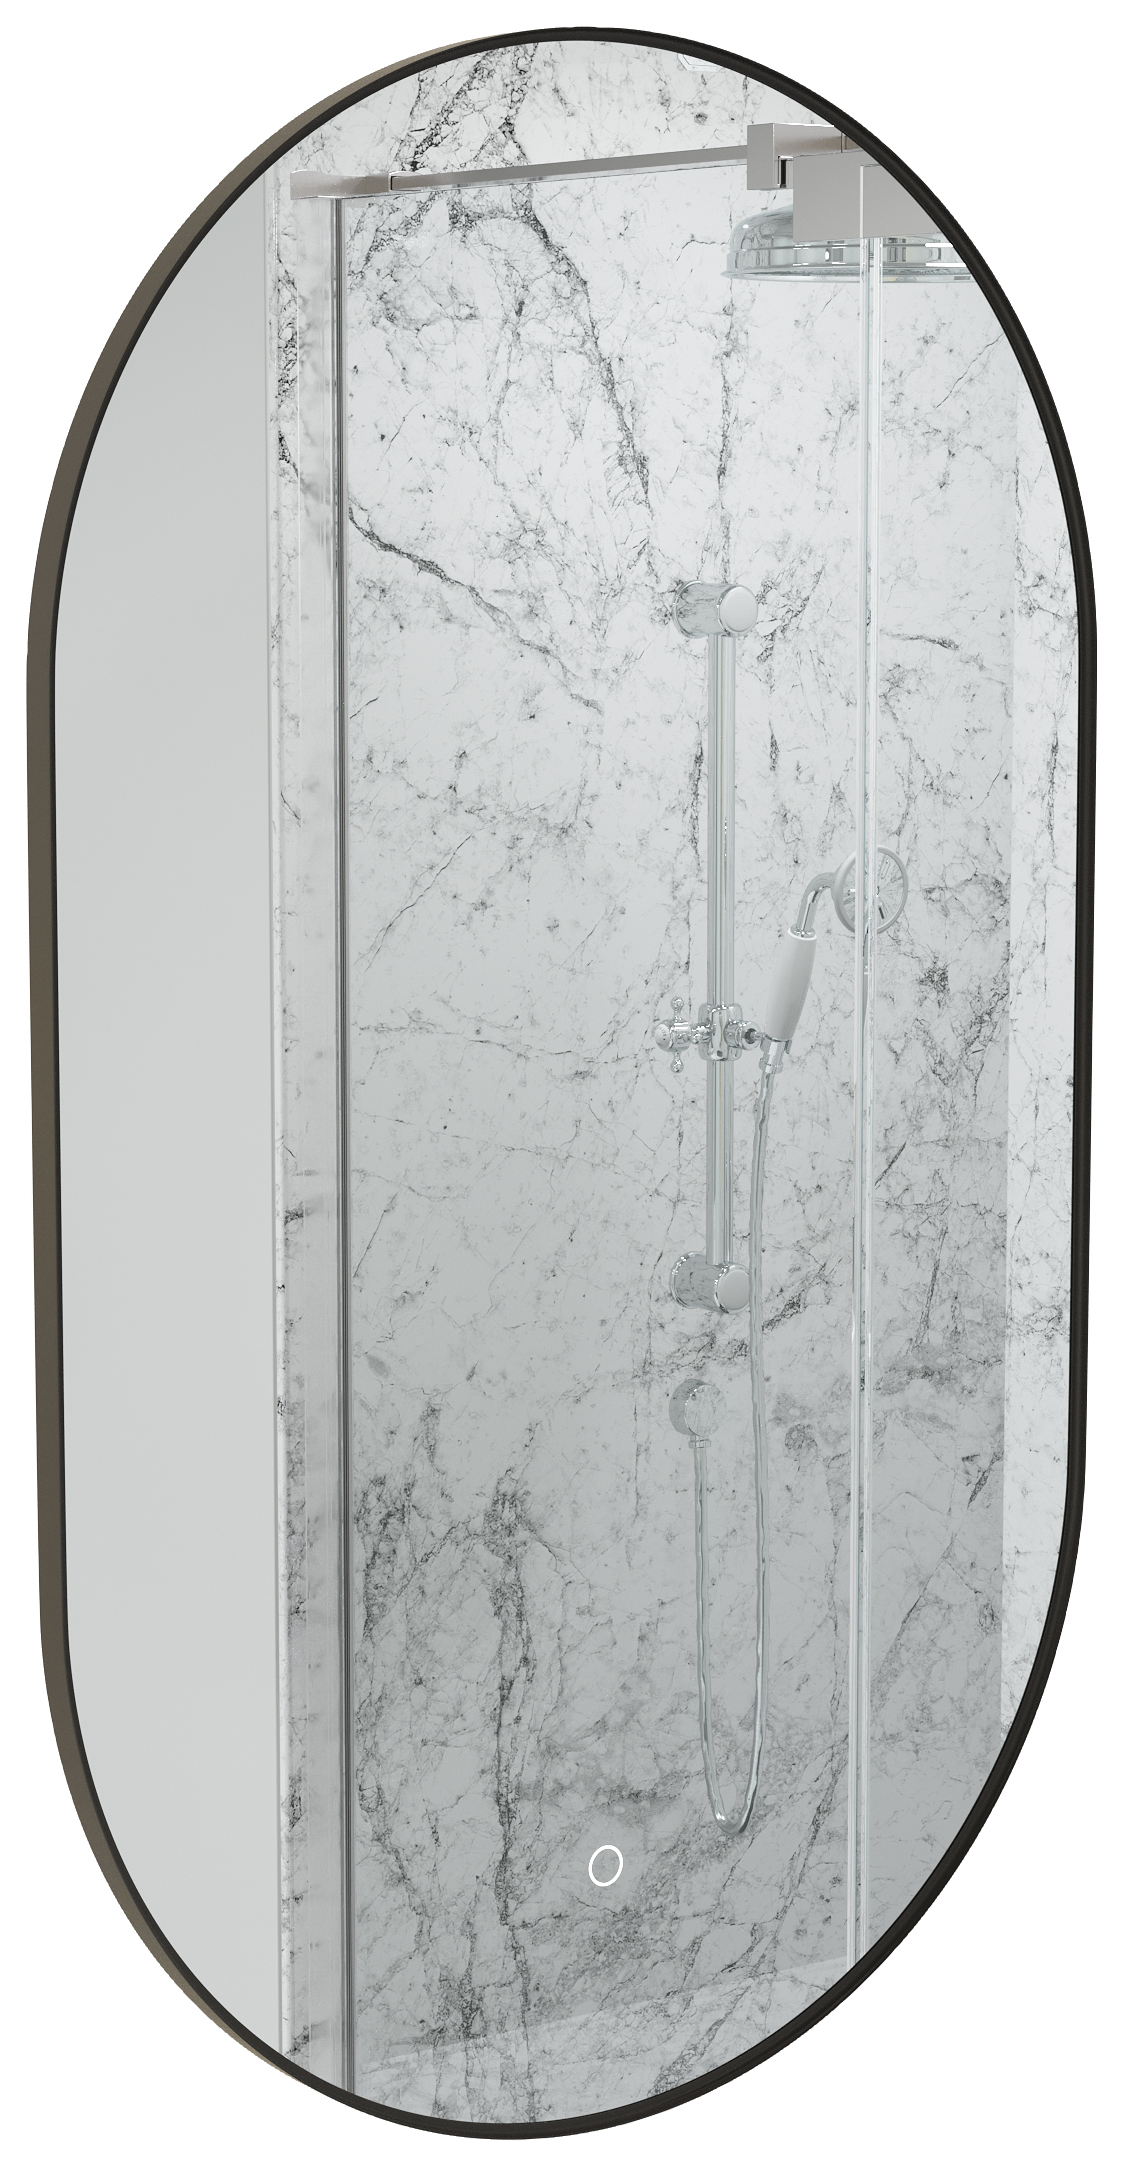 Sensio Nebula Black Colour Changing LED Bathroom Mirror - 600 x 1000mm